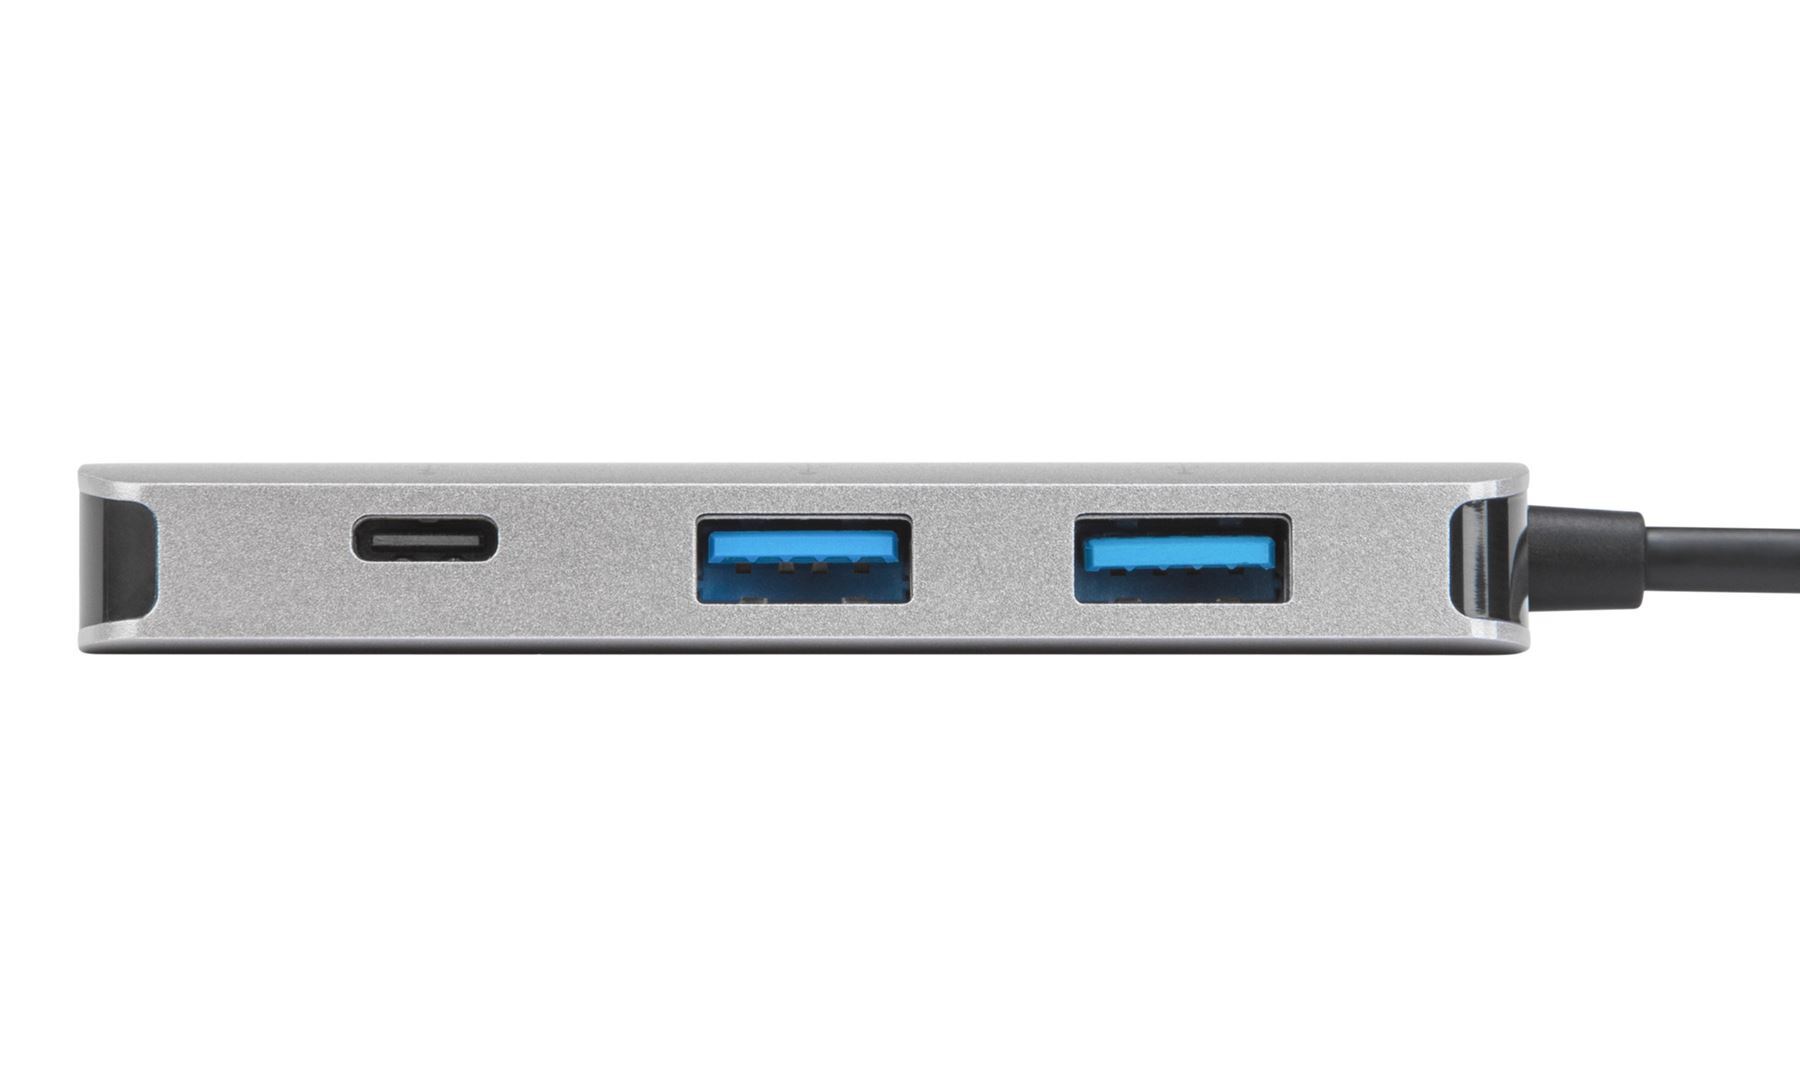 USB-C 2 Port. Type-c Hub 5 в 1 WIWU a531h (Gray). Аксессуары USB-C. Type c HDMI станция.